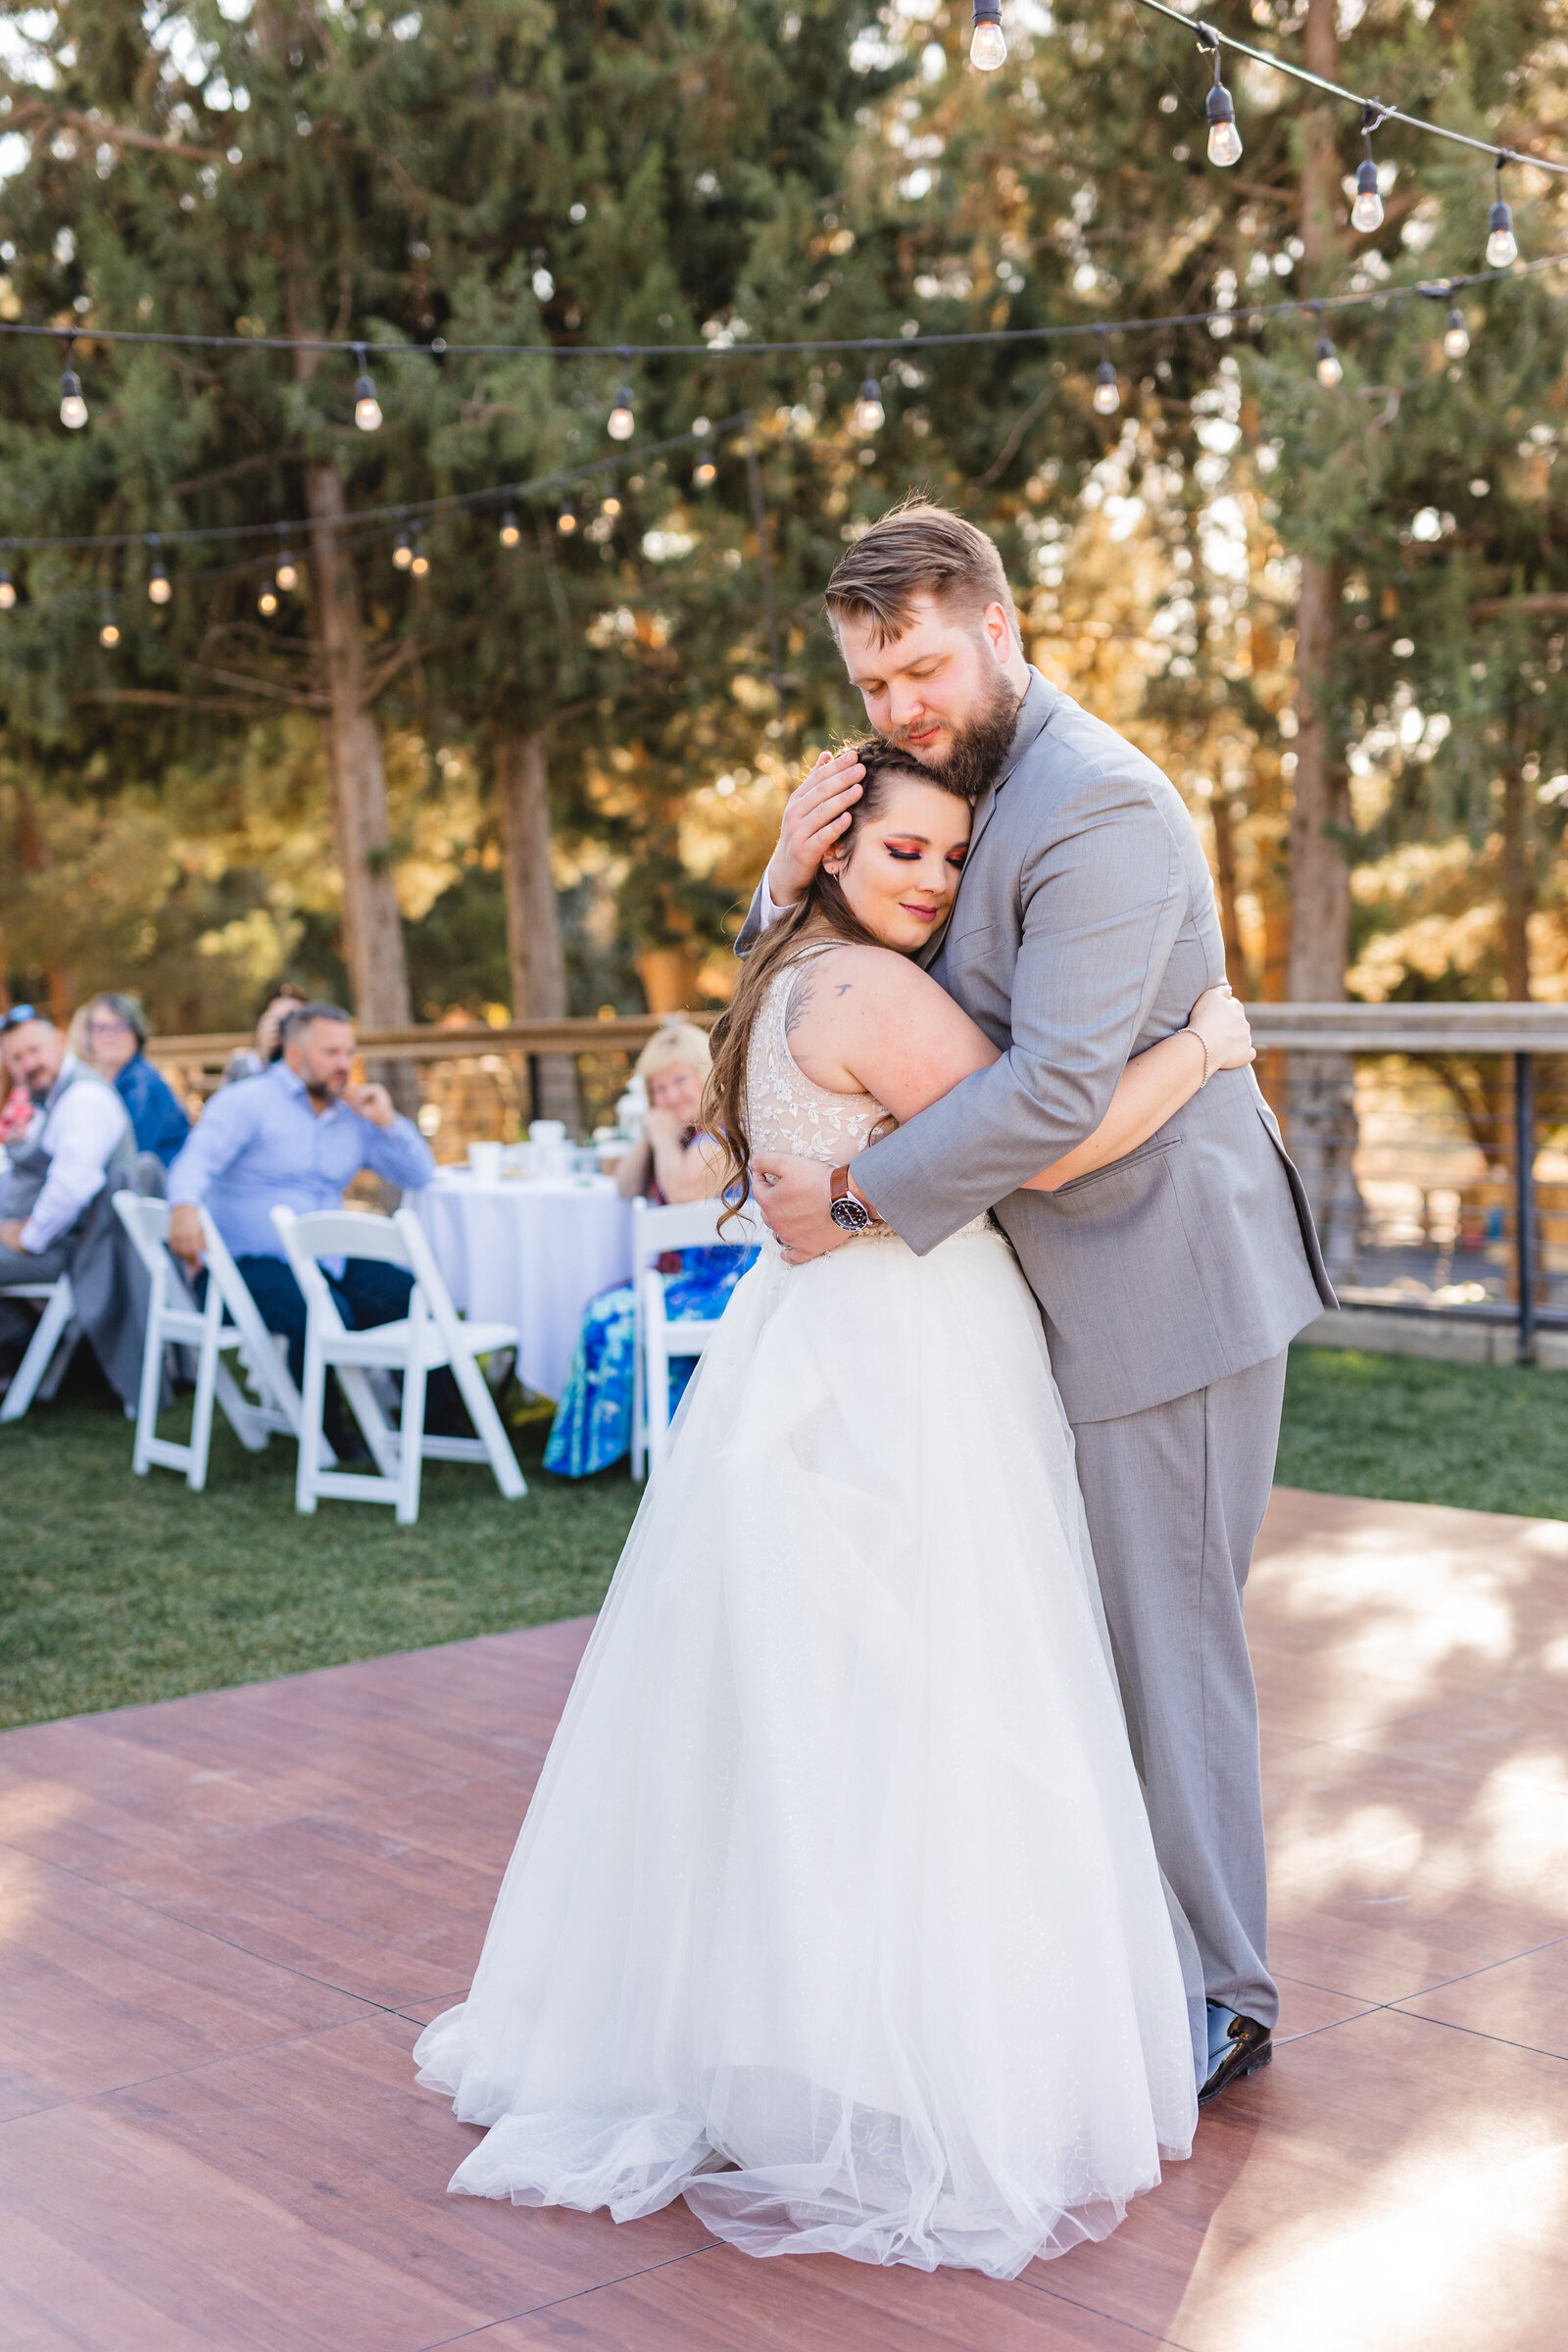 bride and groom during first dance on outdoor dance floor